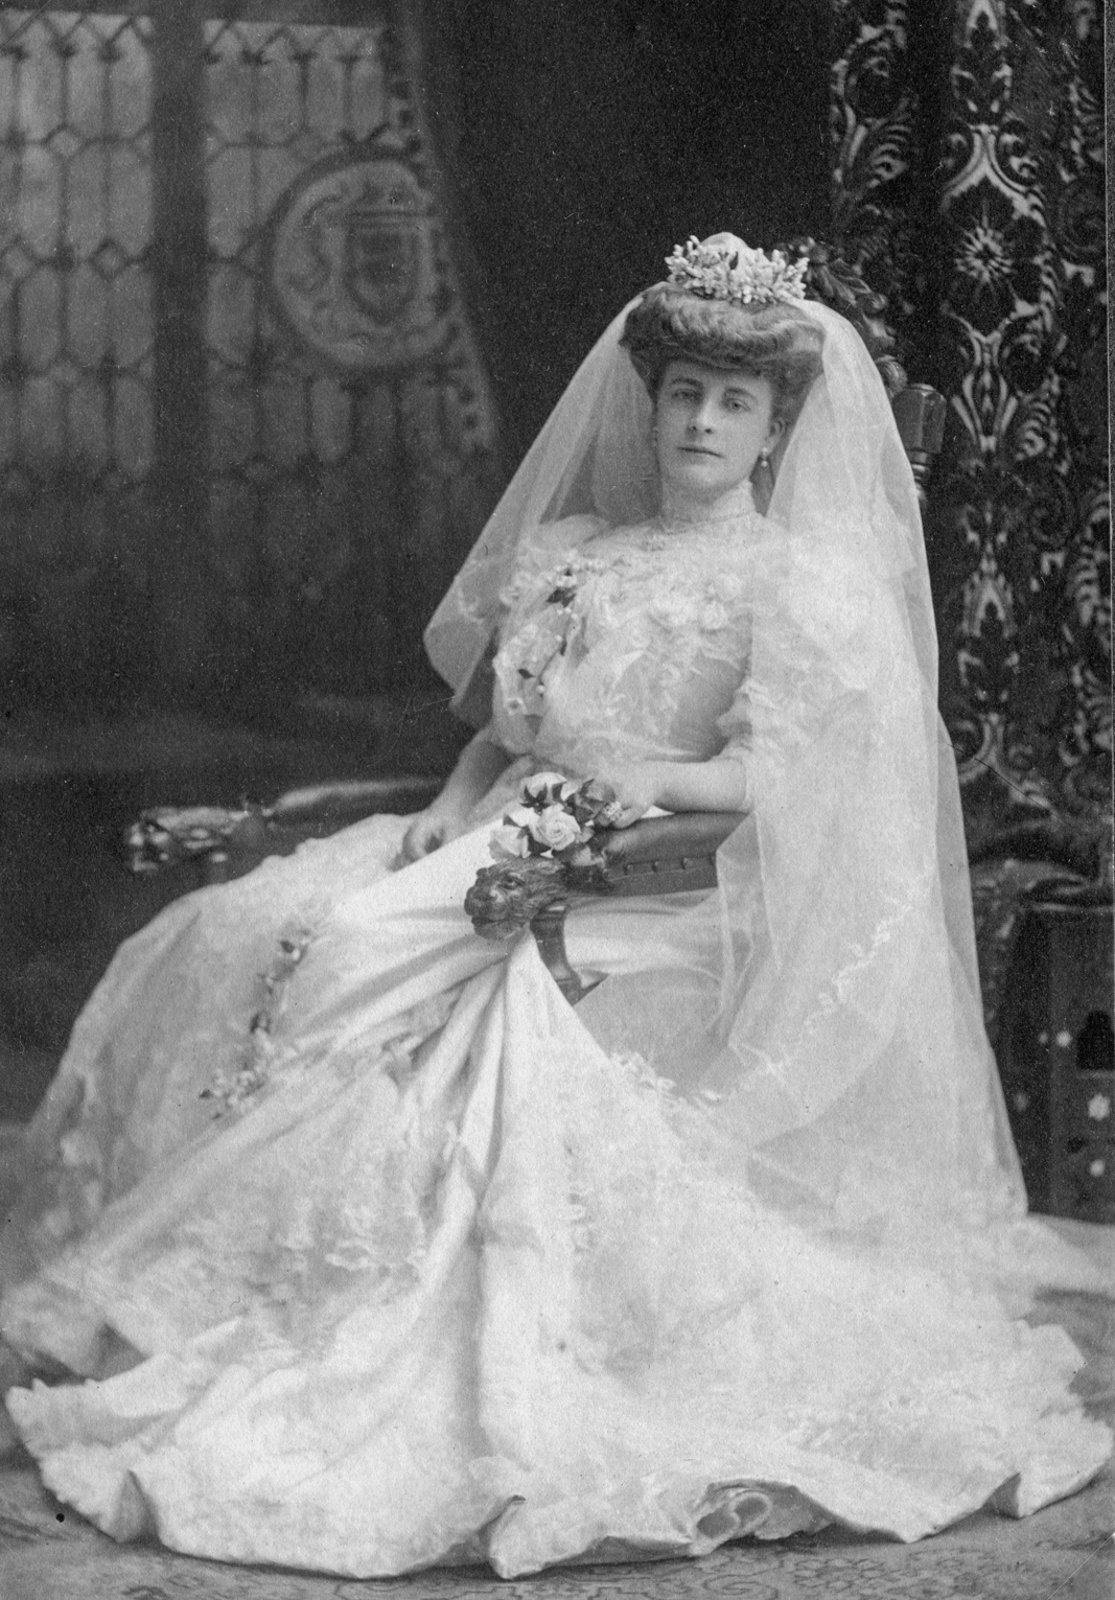 Florence Meerwald (1860-1956) photographed in her wedding dress in 1876. She married Major Robert John D.S.O. Baker.